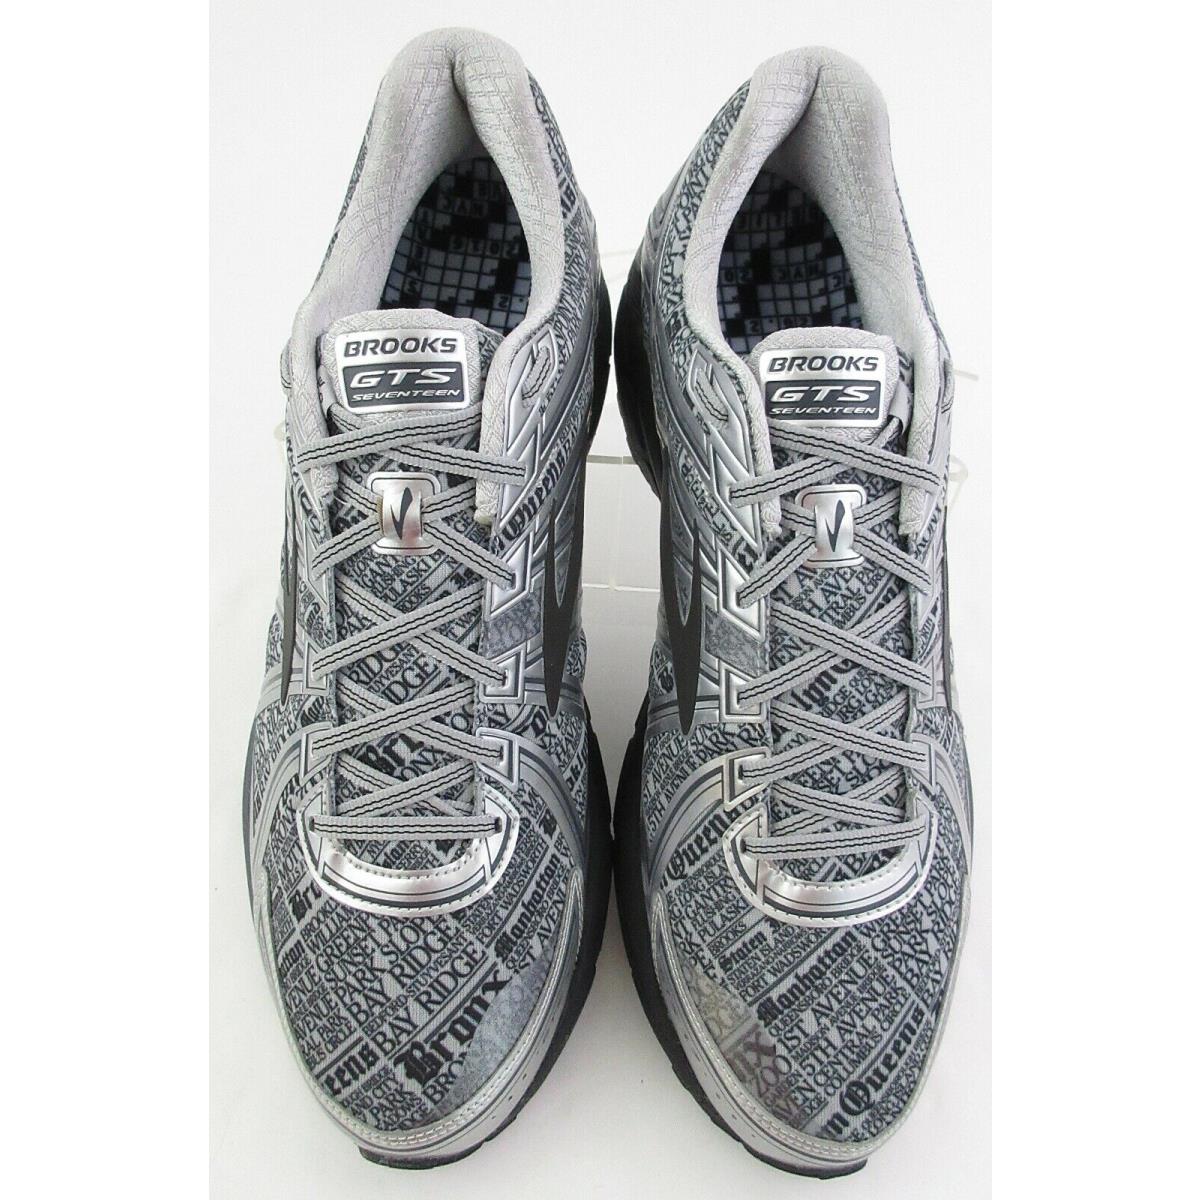 Brooks shoes Adrenaline GTS - Gray/Black/Silver 0